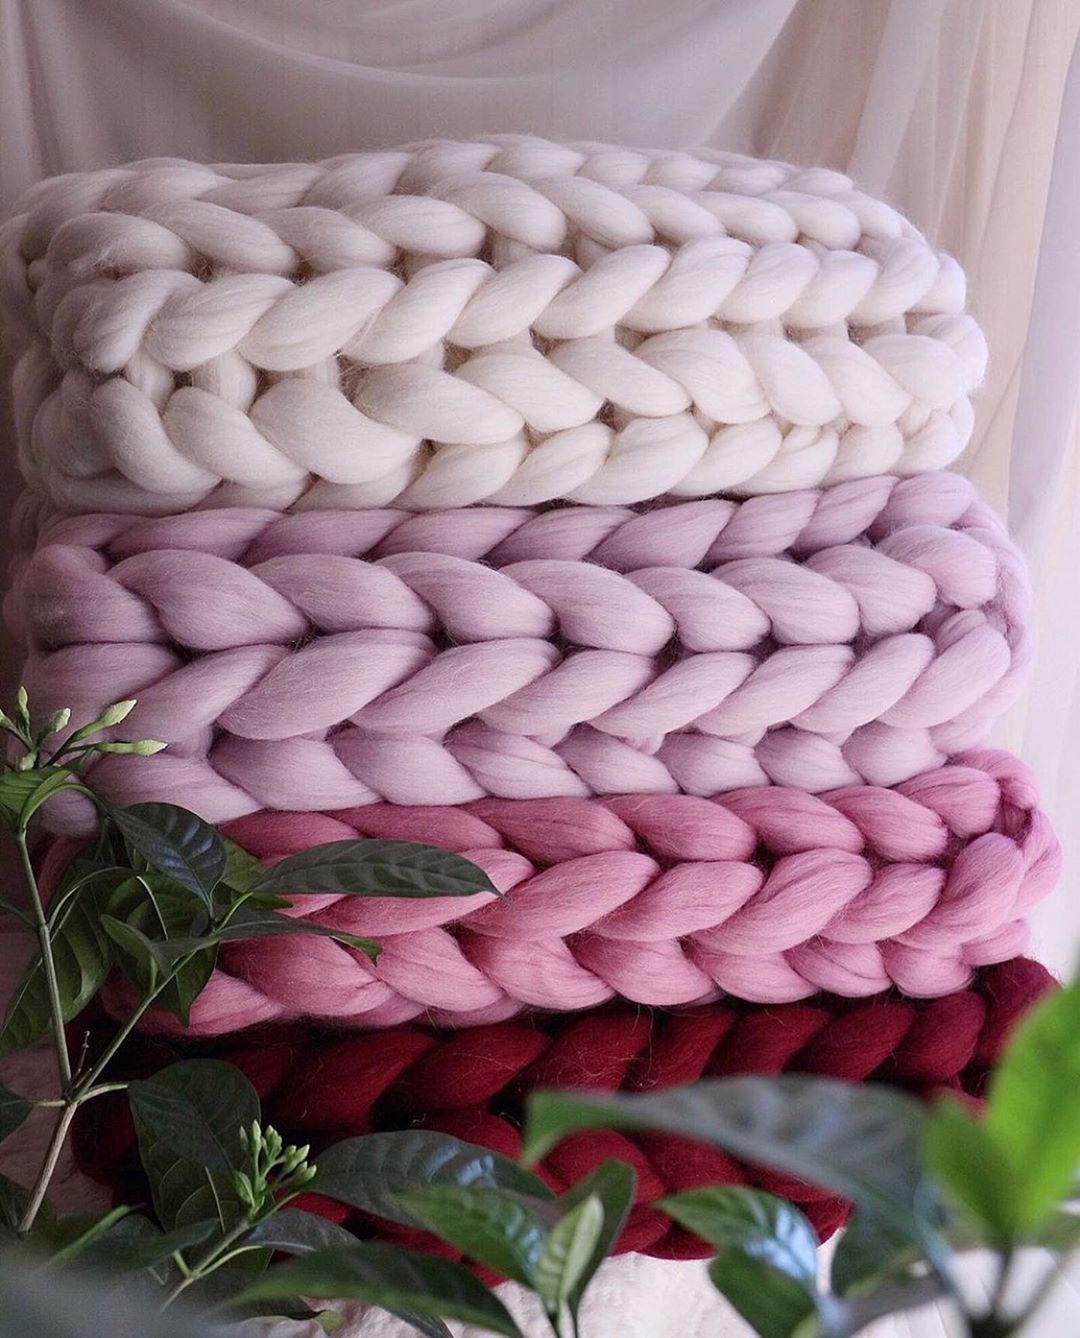 Super Chunky knit blanket, Merino wool blanket, Arm knitted blanket